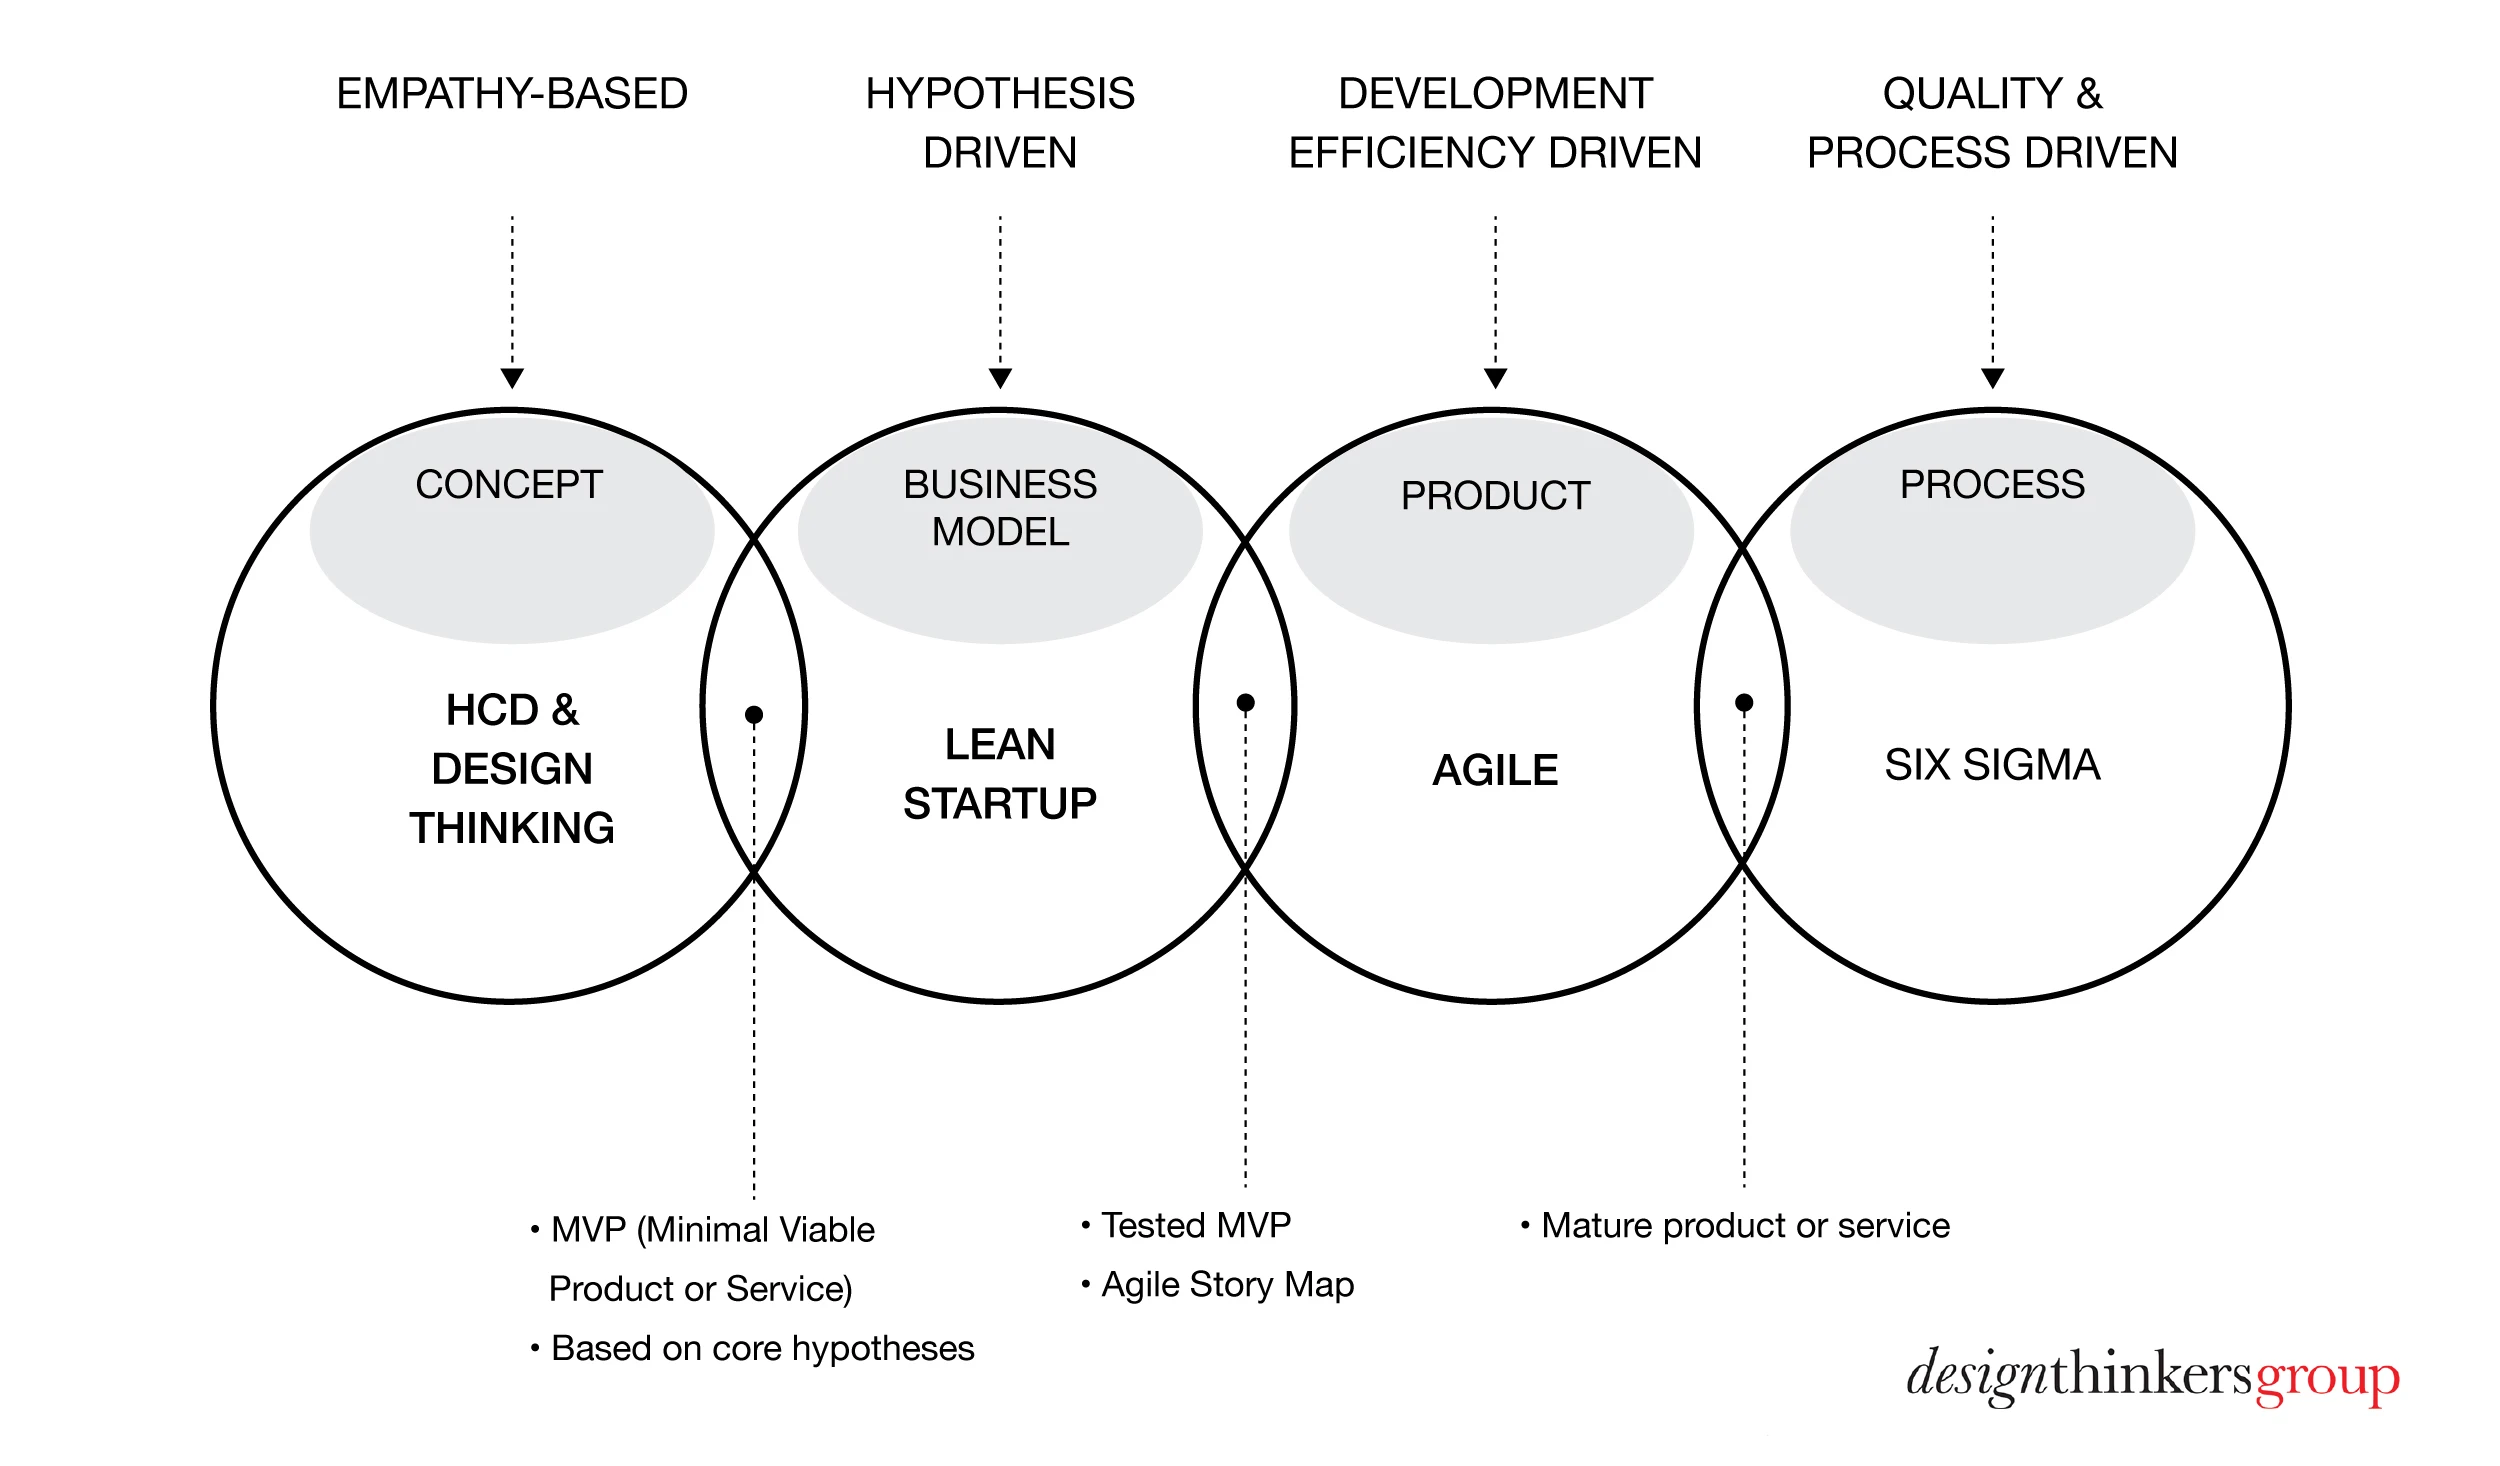 Design Thinking vs. Lean Startup vs. Agile vs. Six Sigma